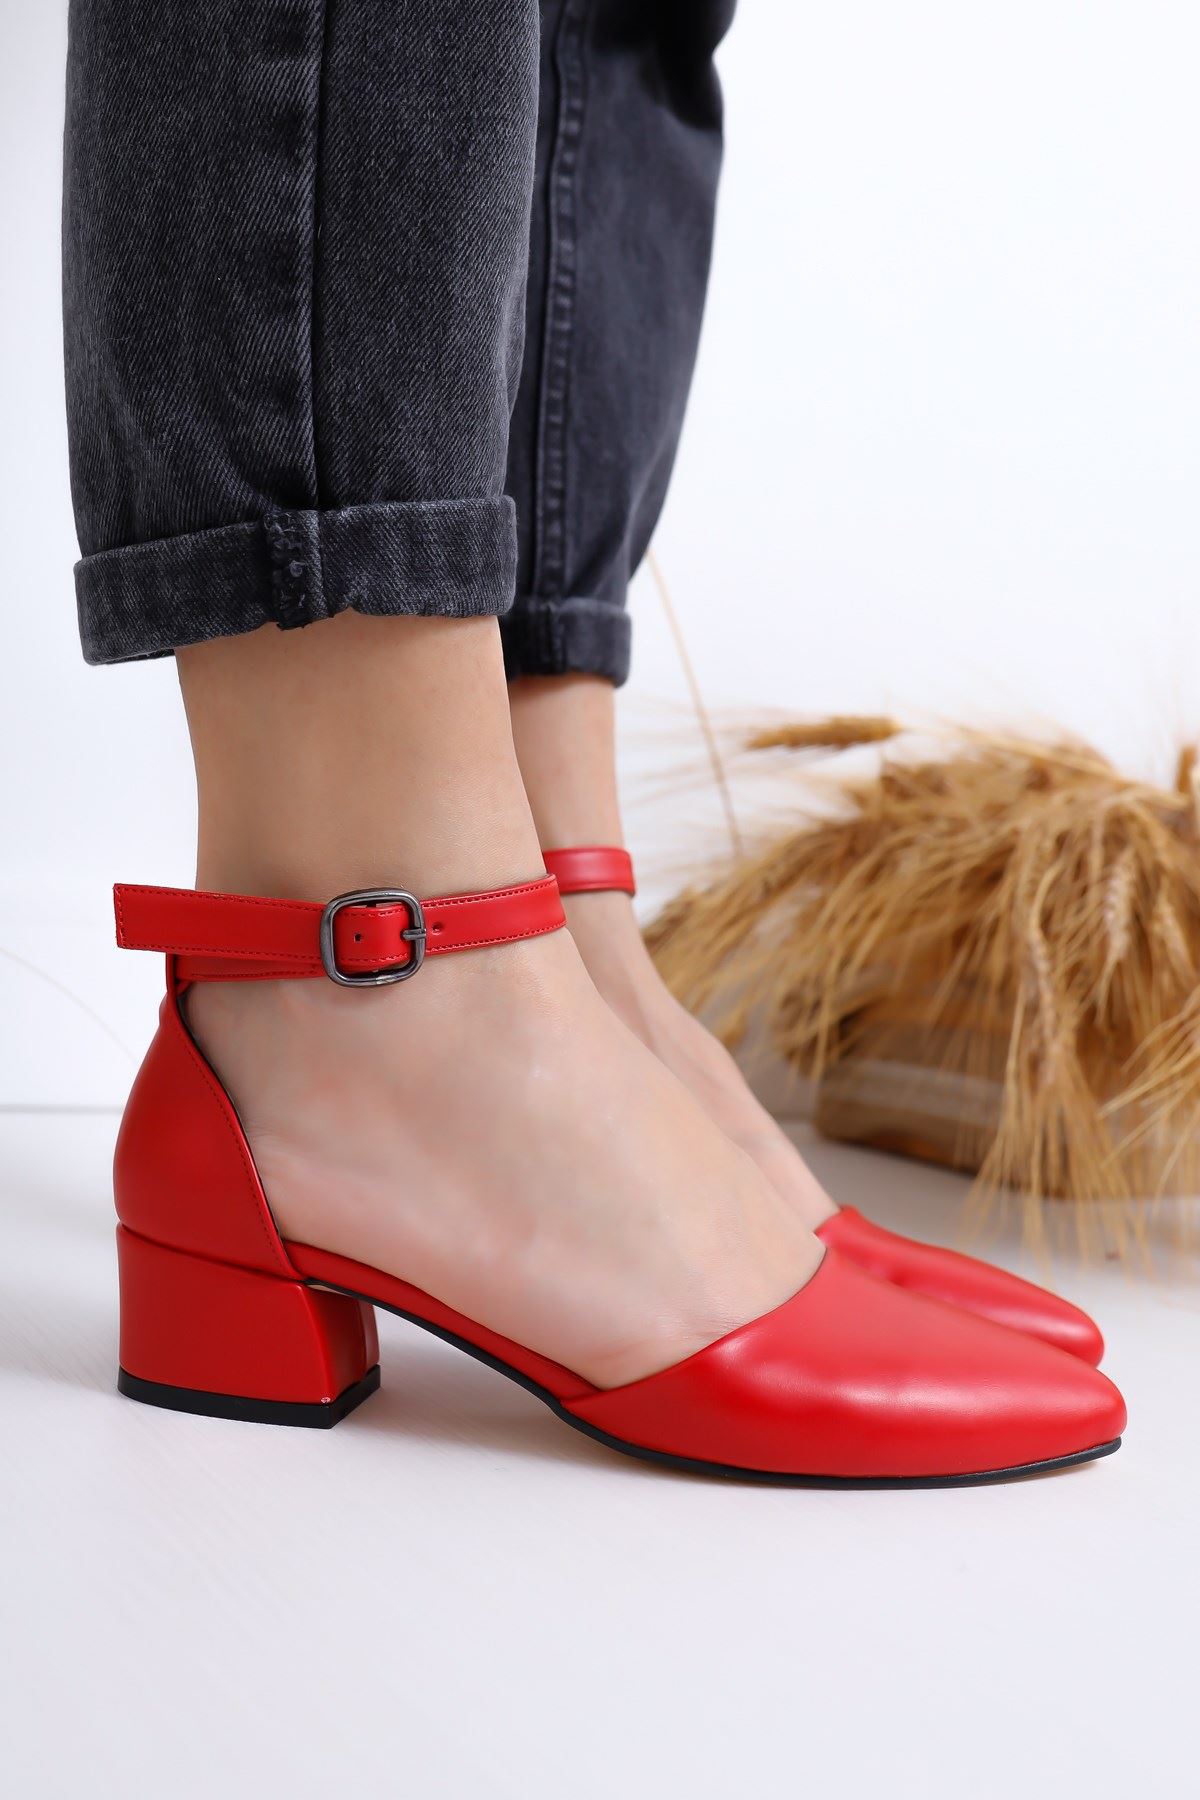 Dary Topuklu Kırmızı Cilt Ayakkabı